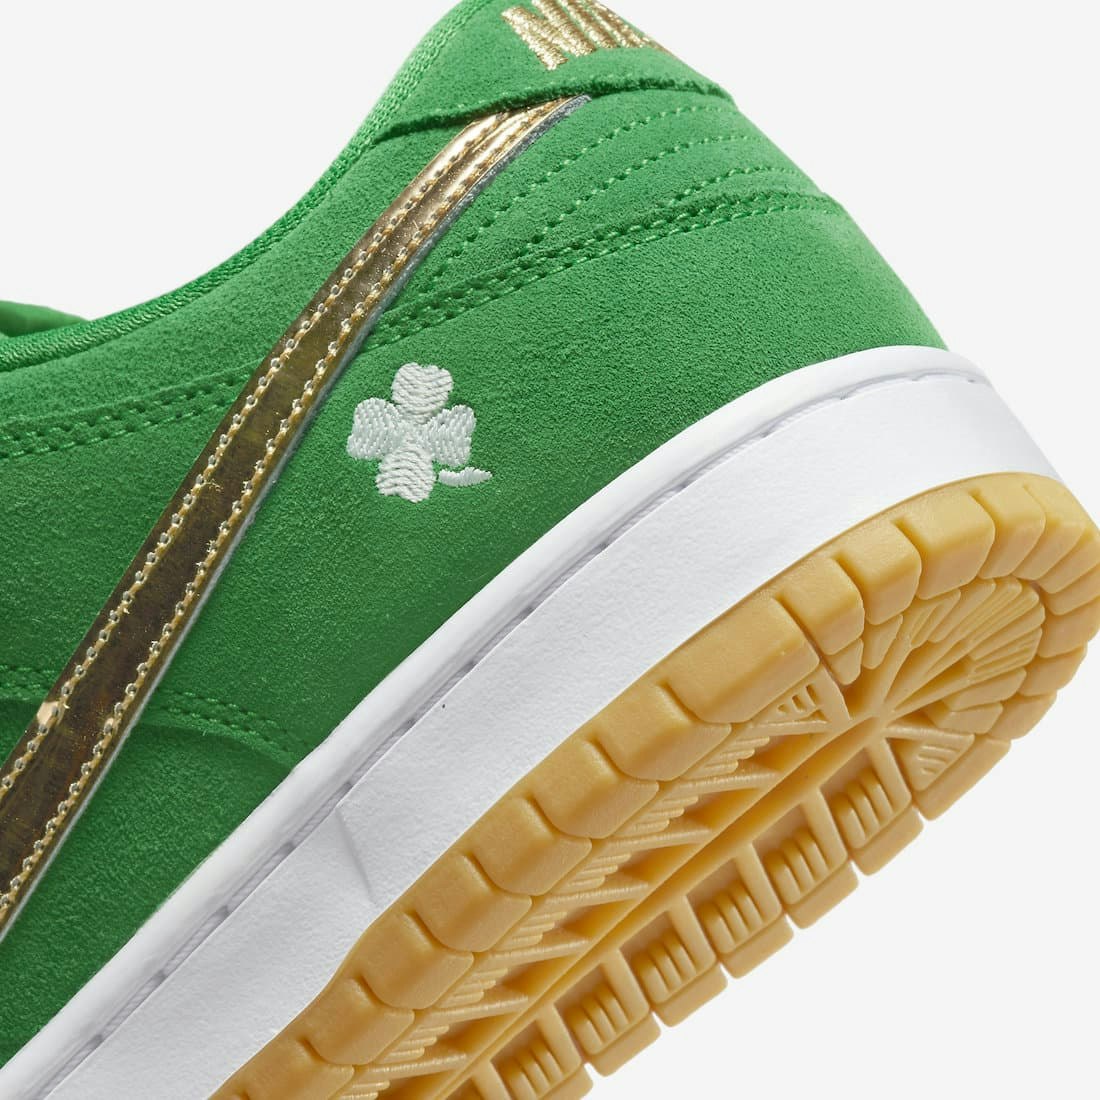 Nike SB Dunk Low "St. Patrick’s Day"